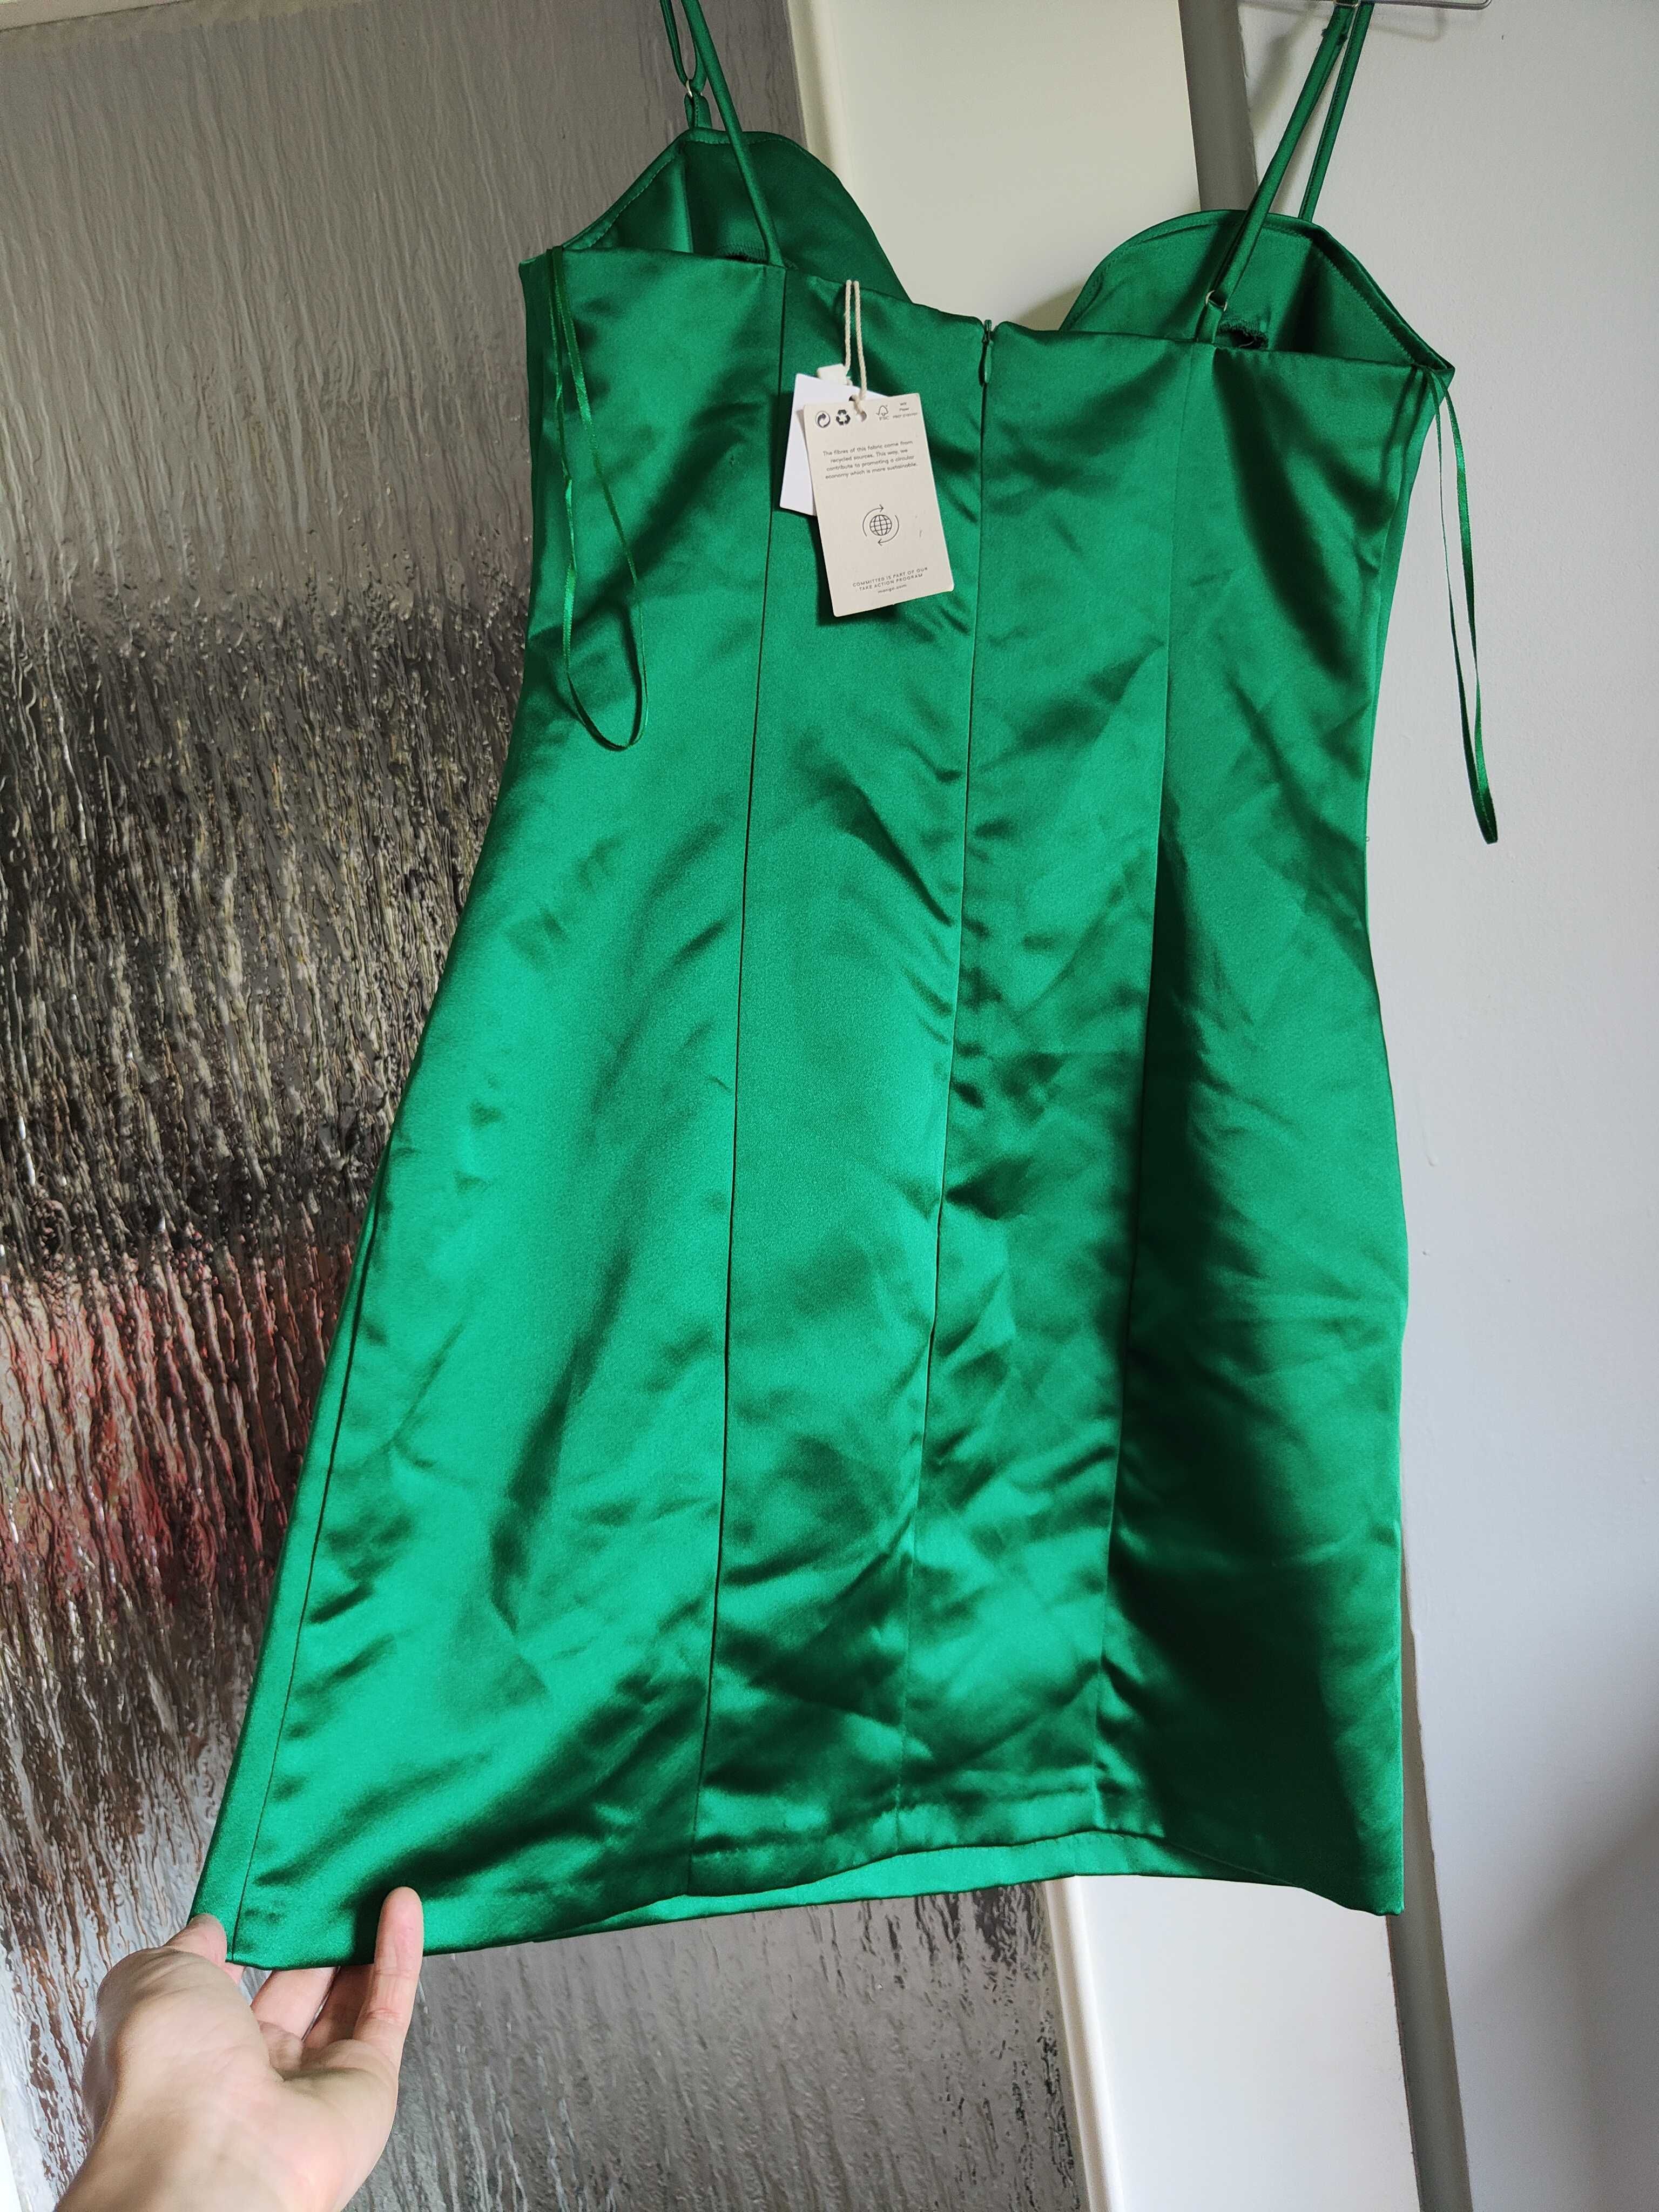 Elegancka sukienka butelkowa zieleń S nowa